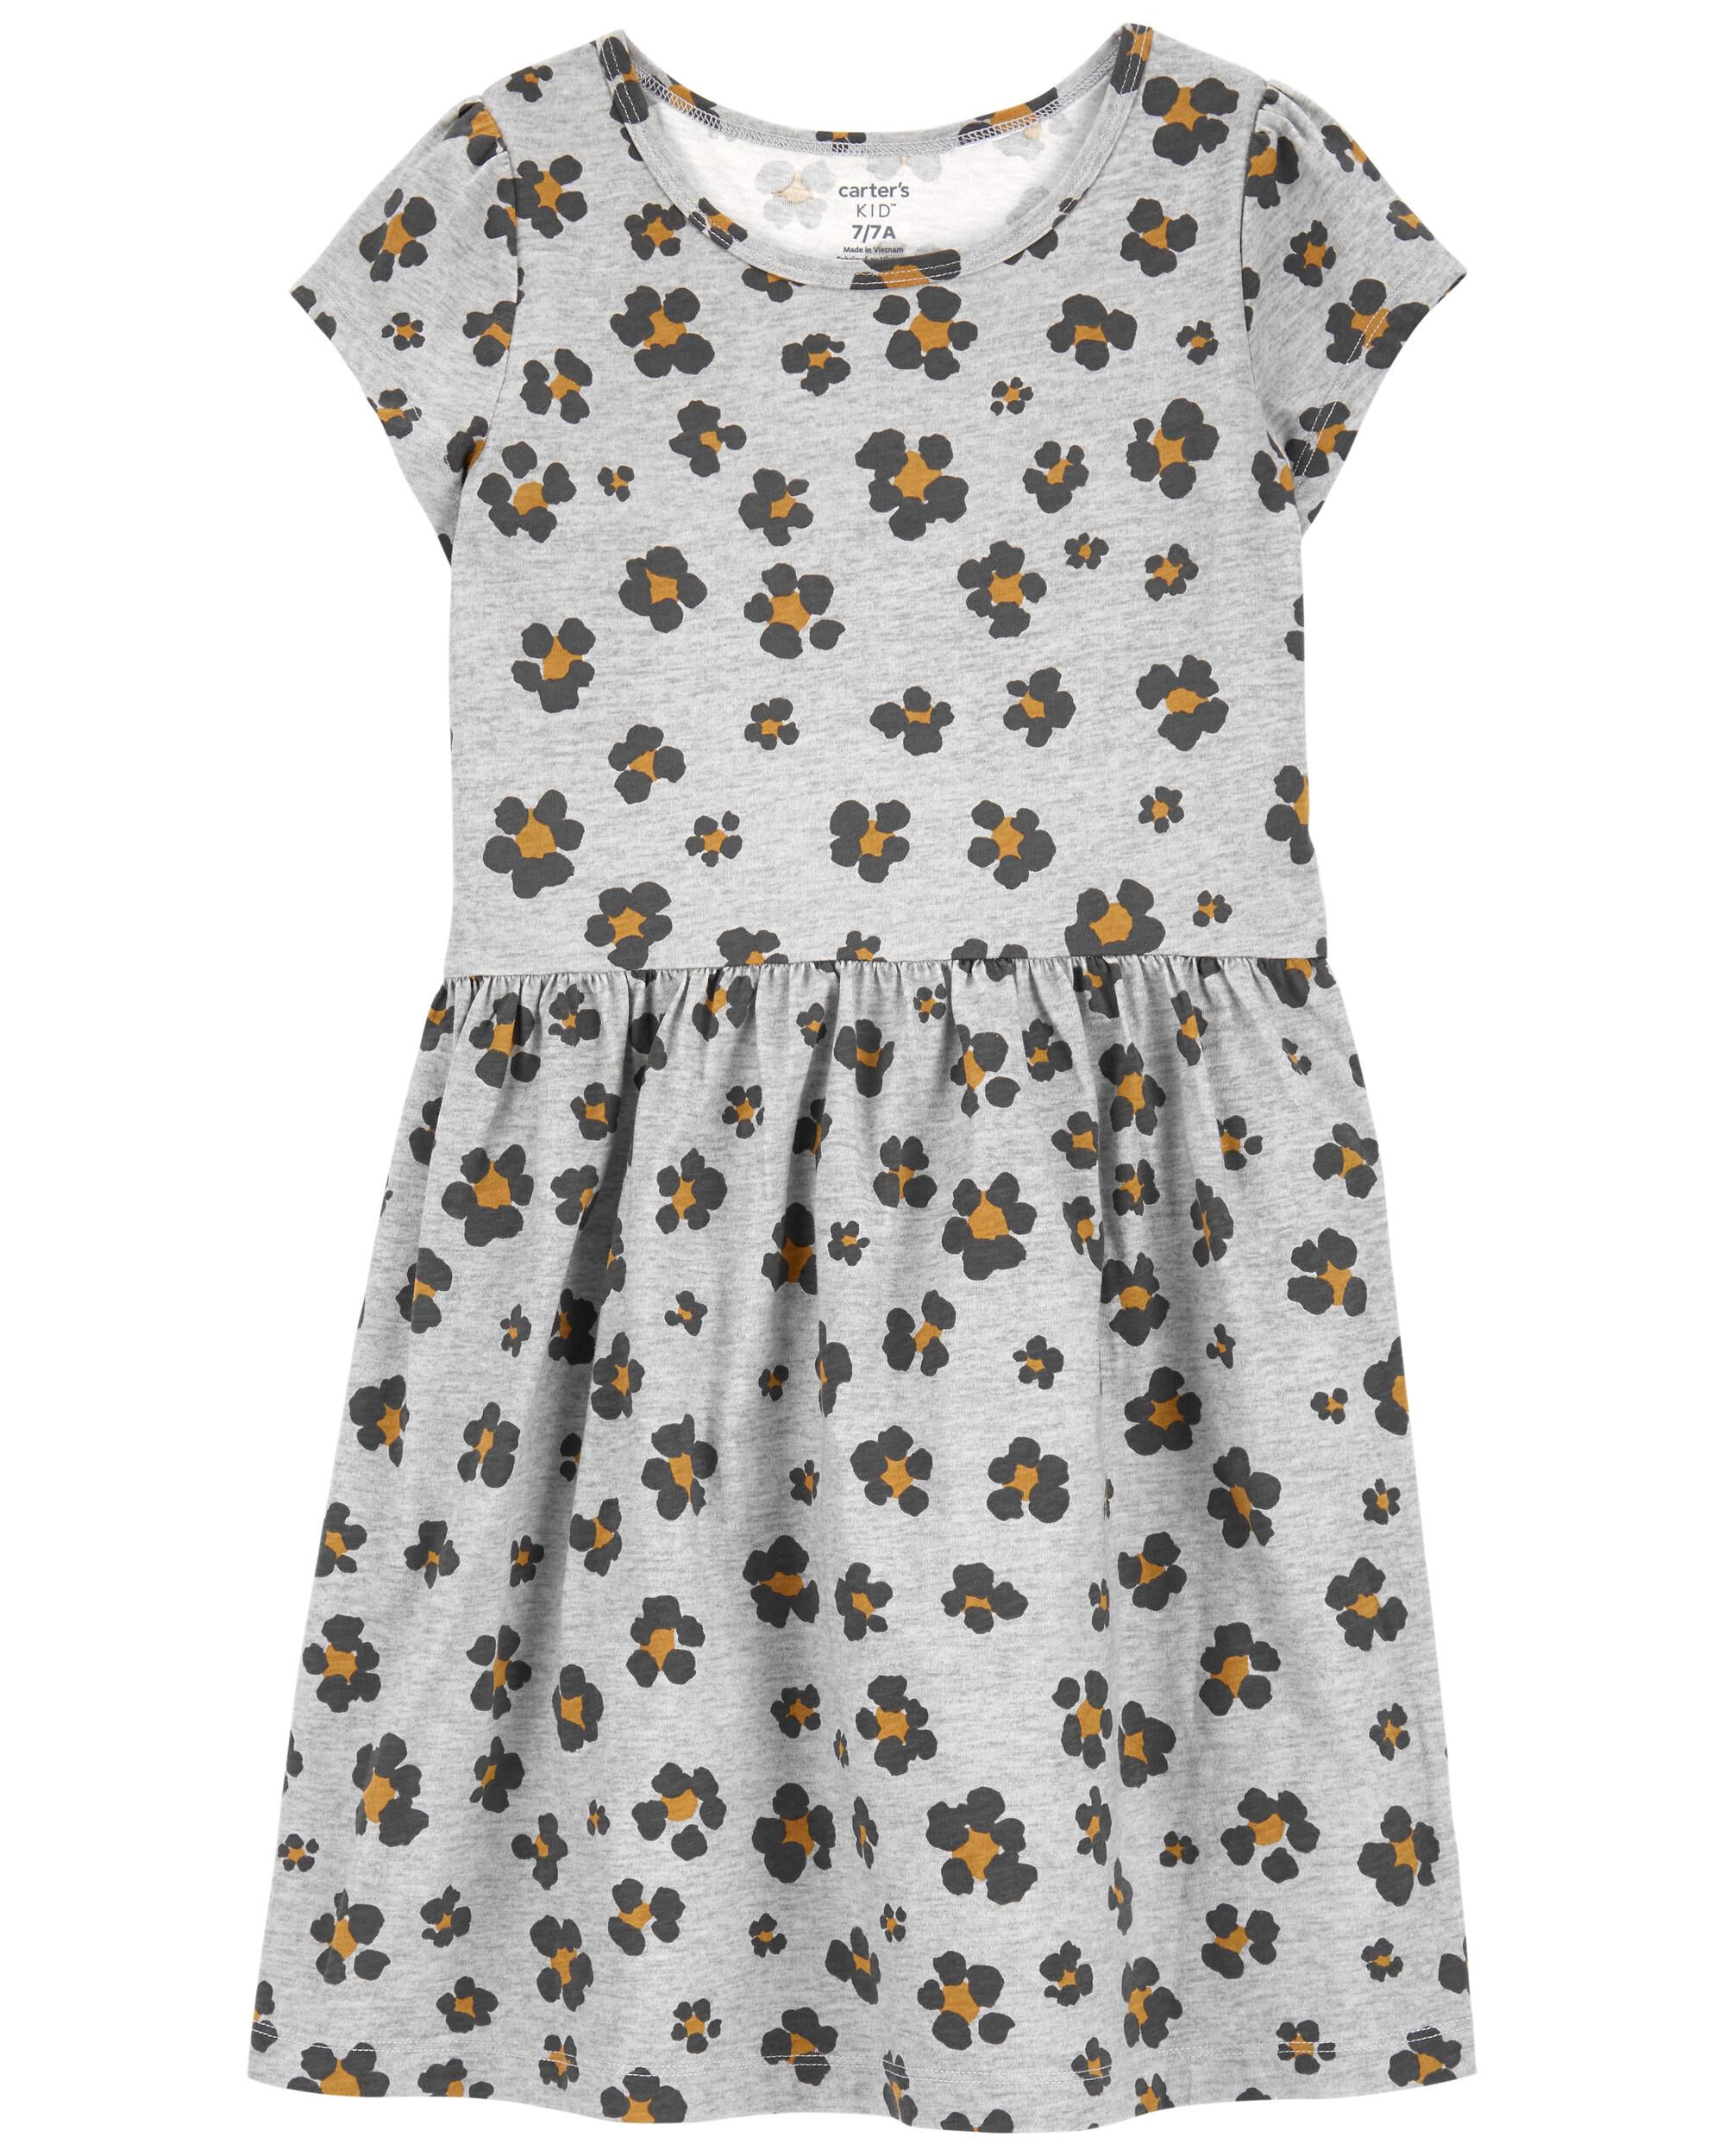 Carters Floral Leopard Jersey Dress